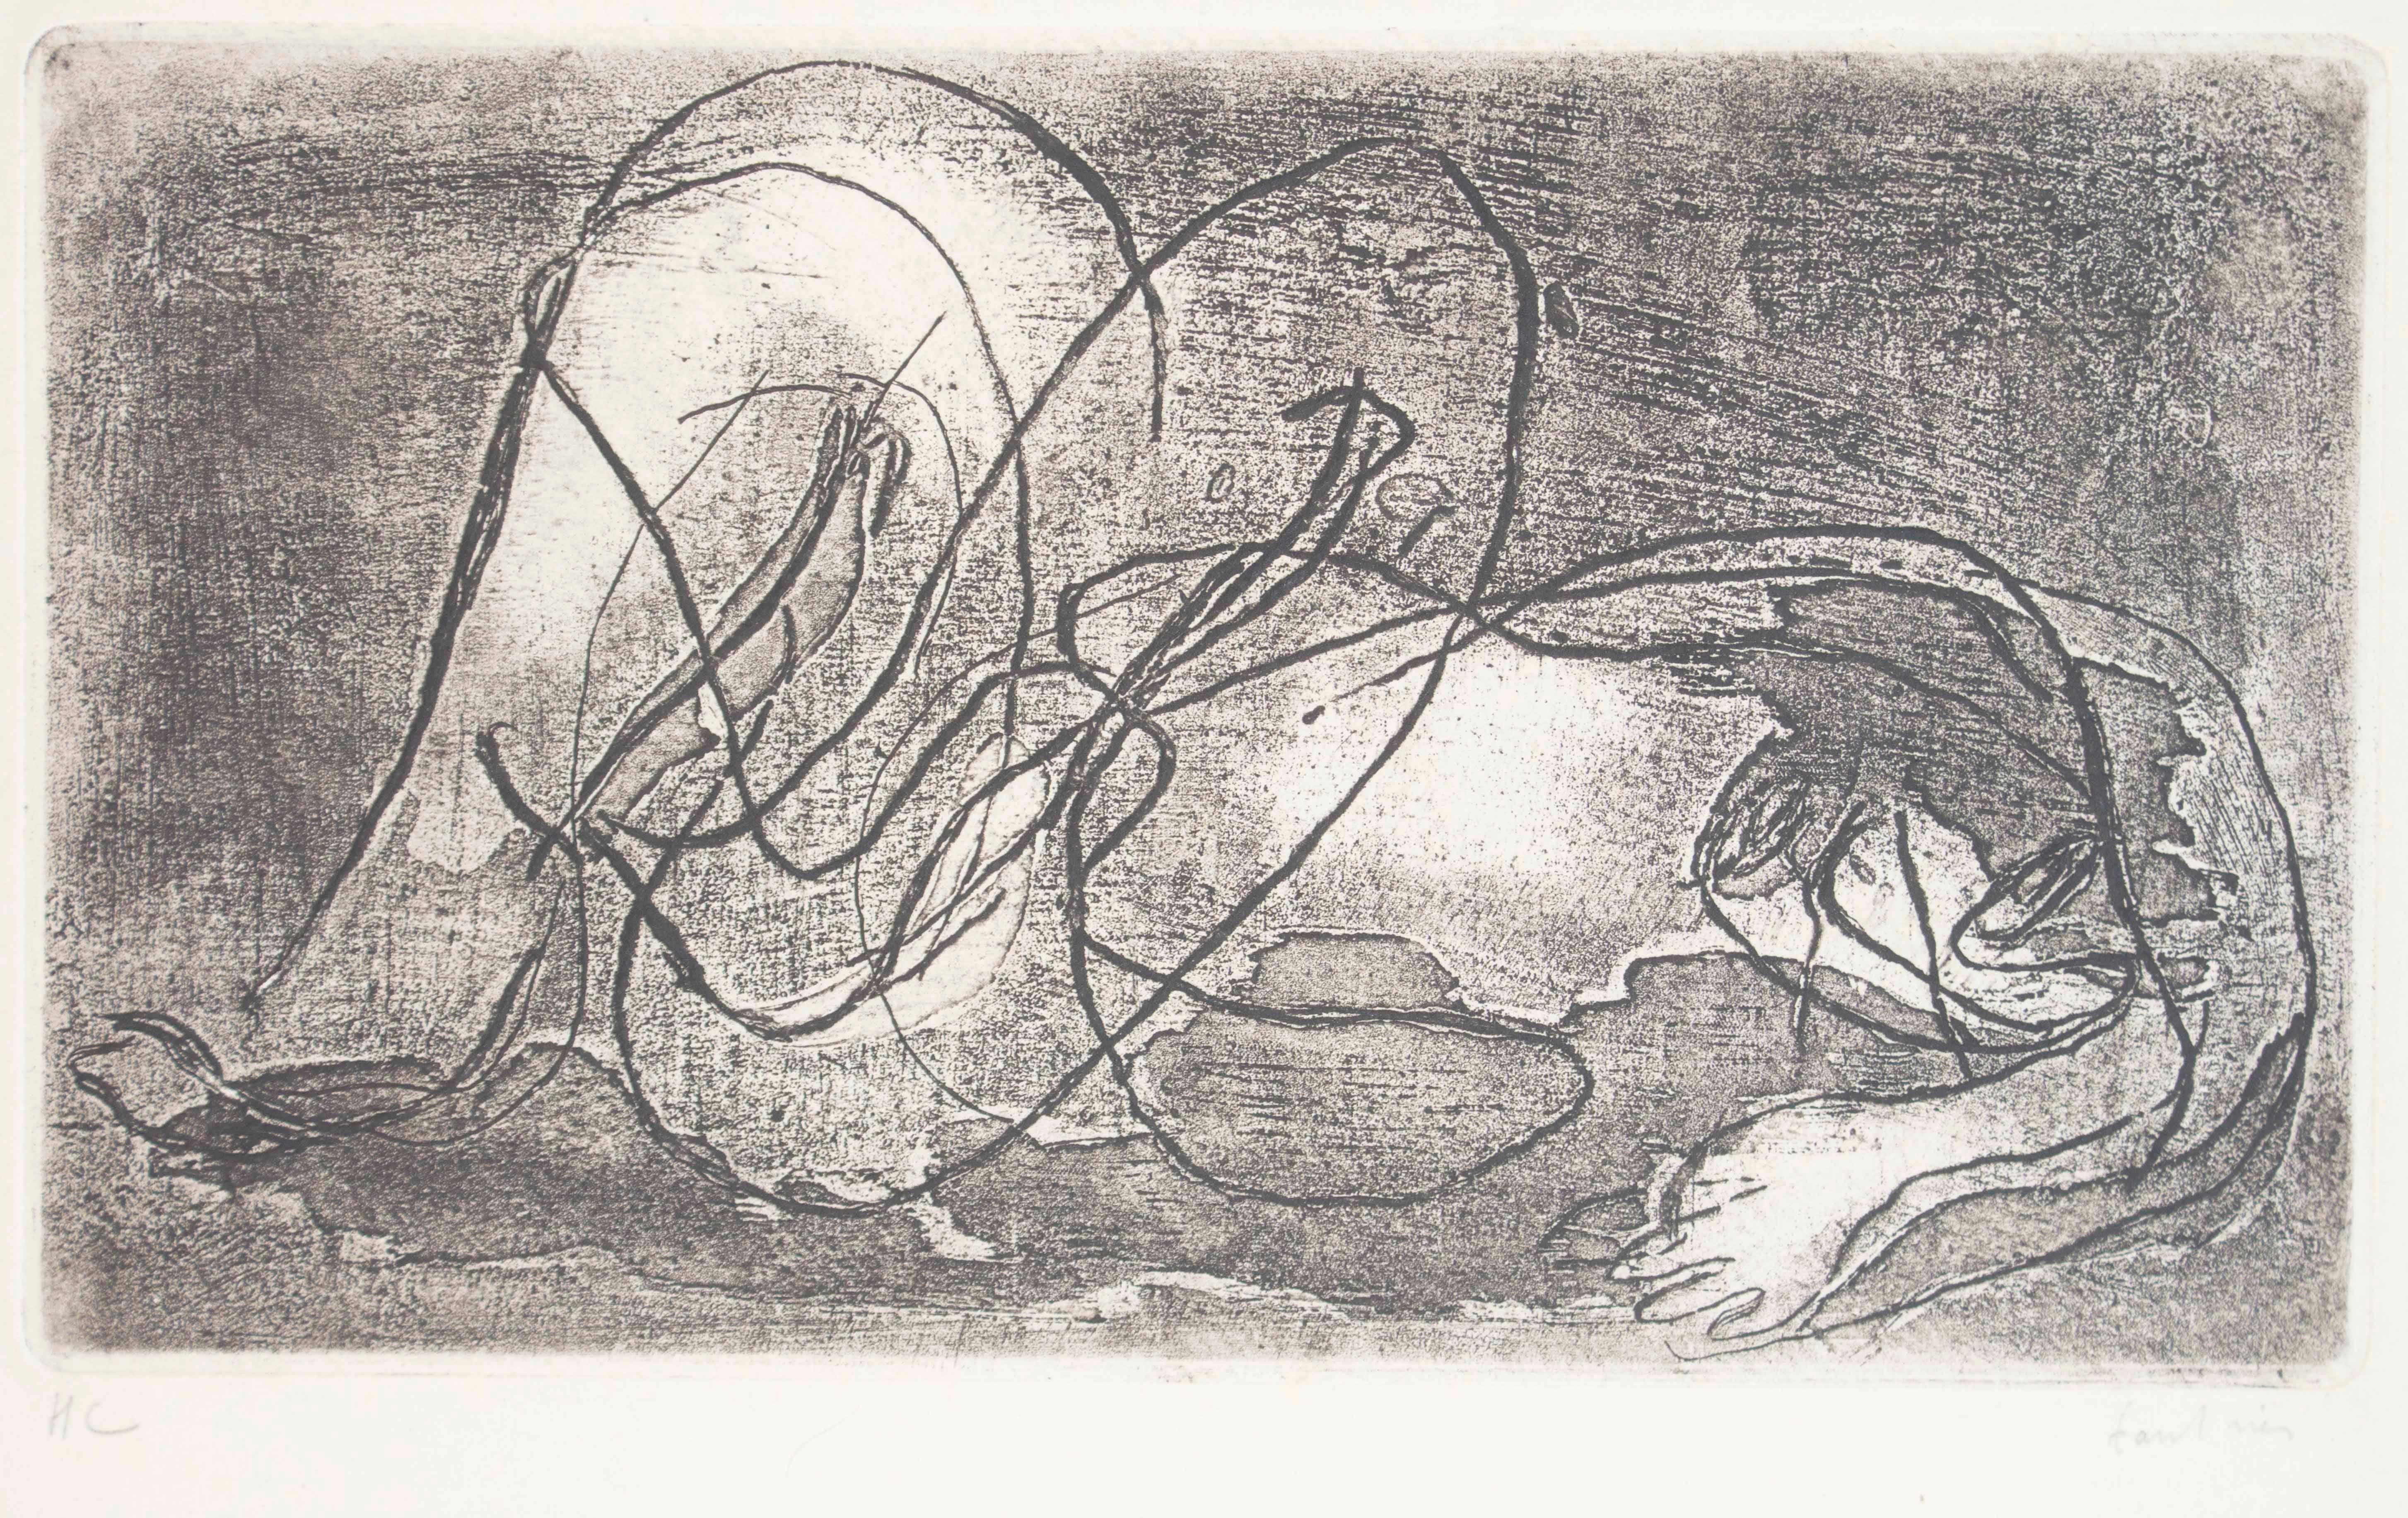 Jean Fautrier Abstract Print - Nu - Original Etching by J. Fautrier - 1941